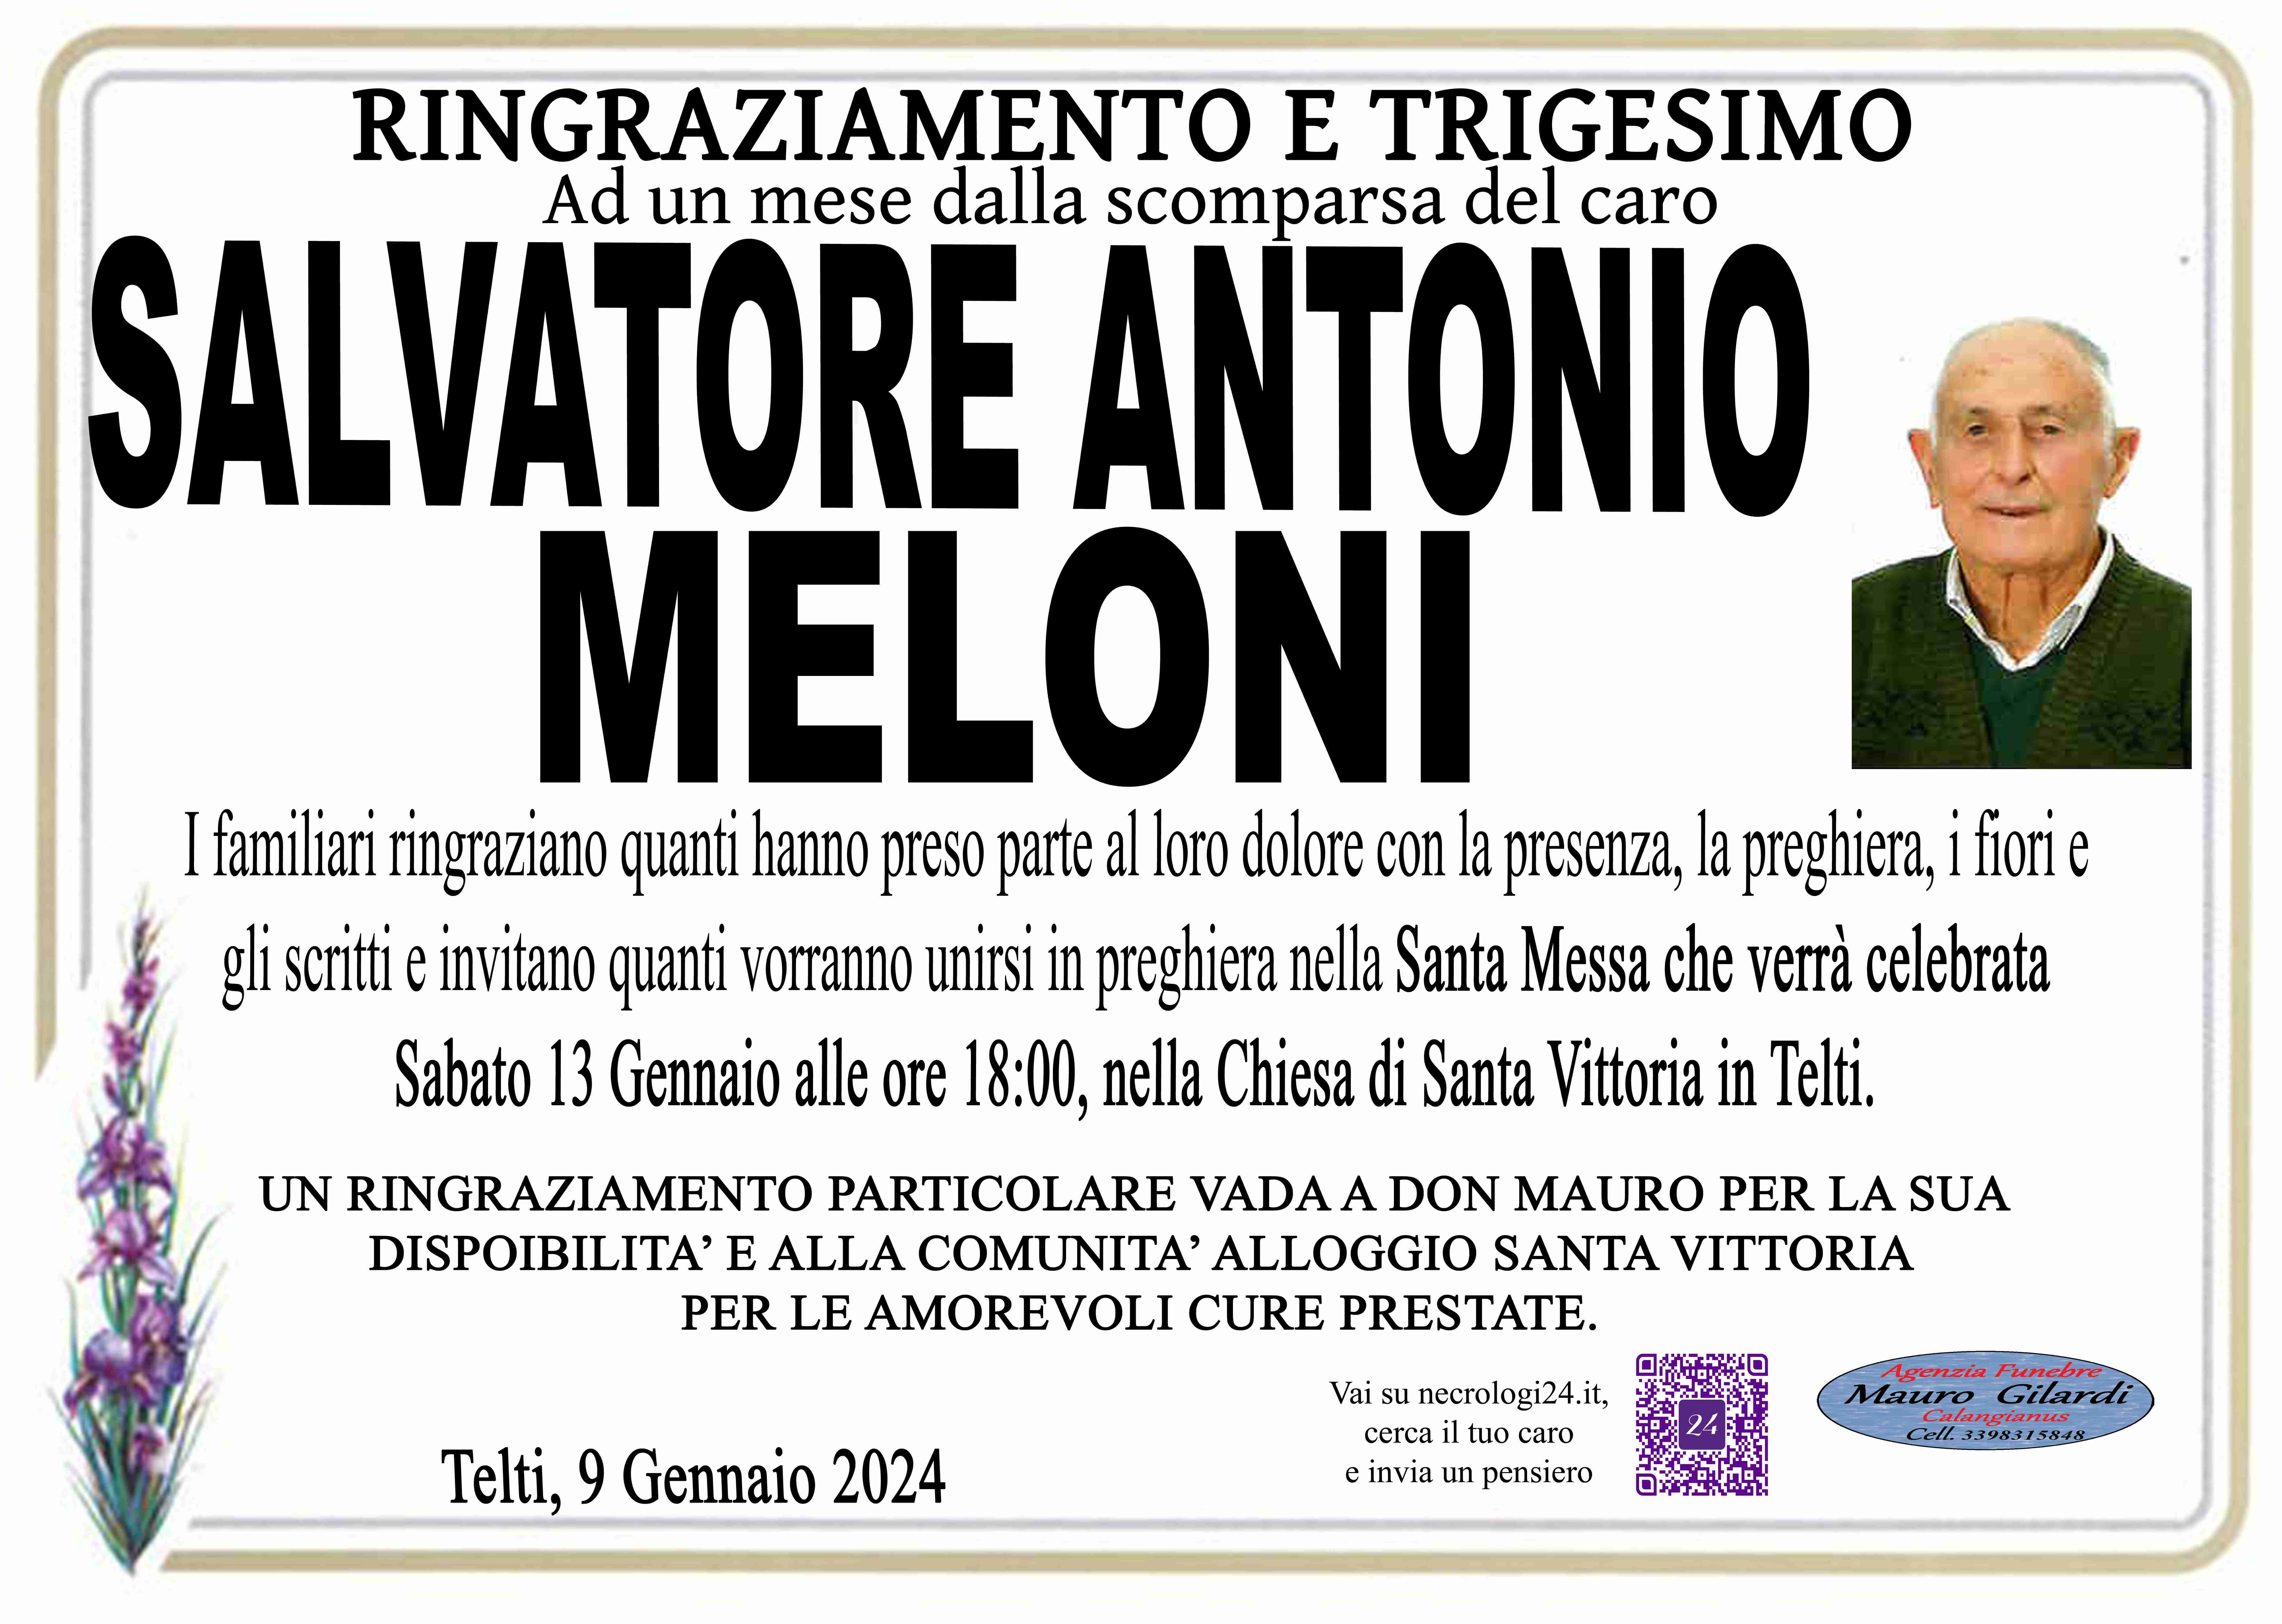 Salvatore Antonio Meloni